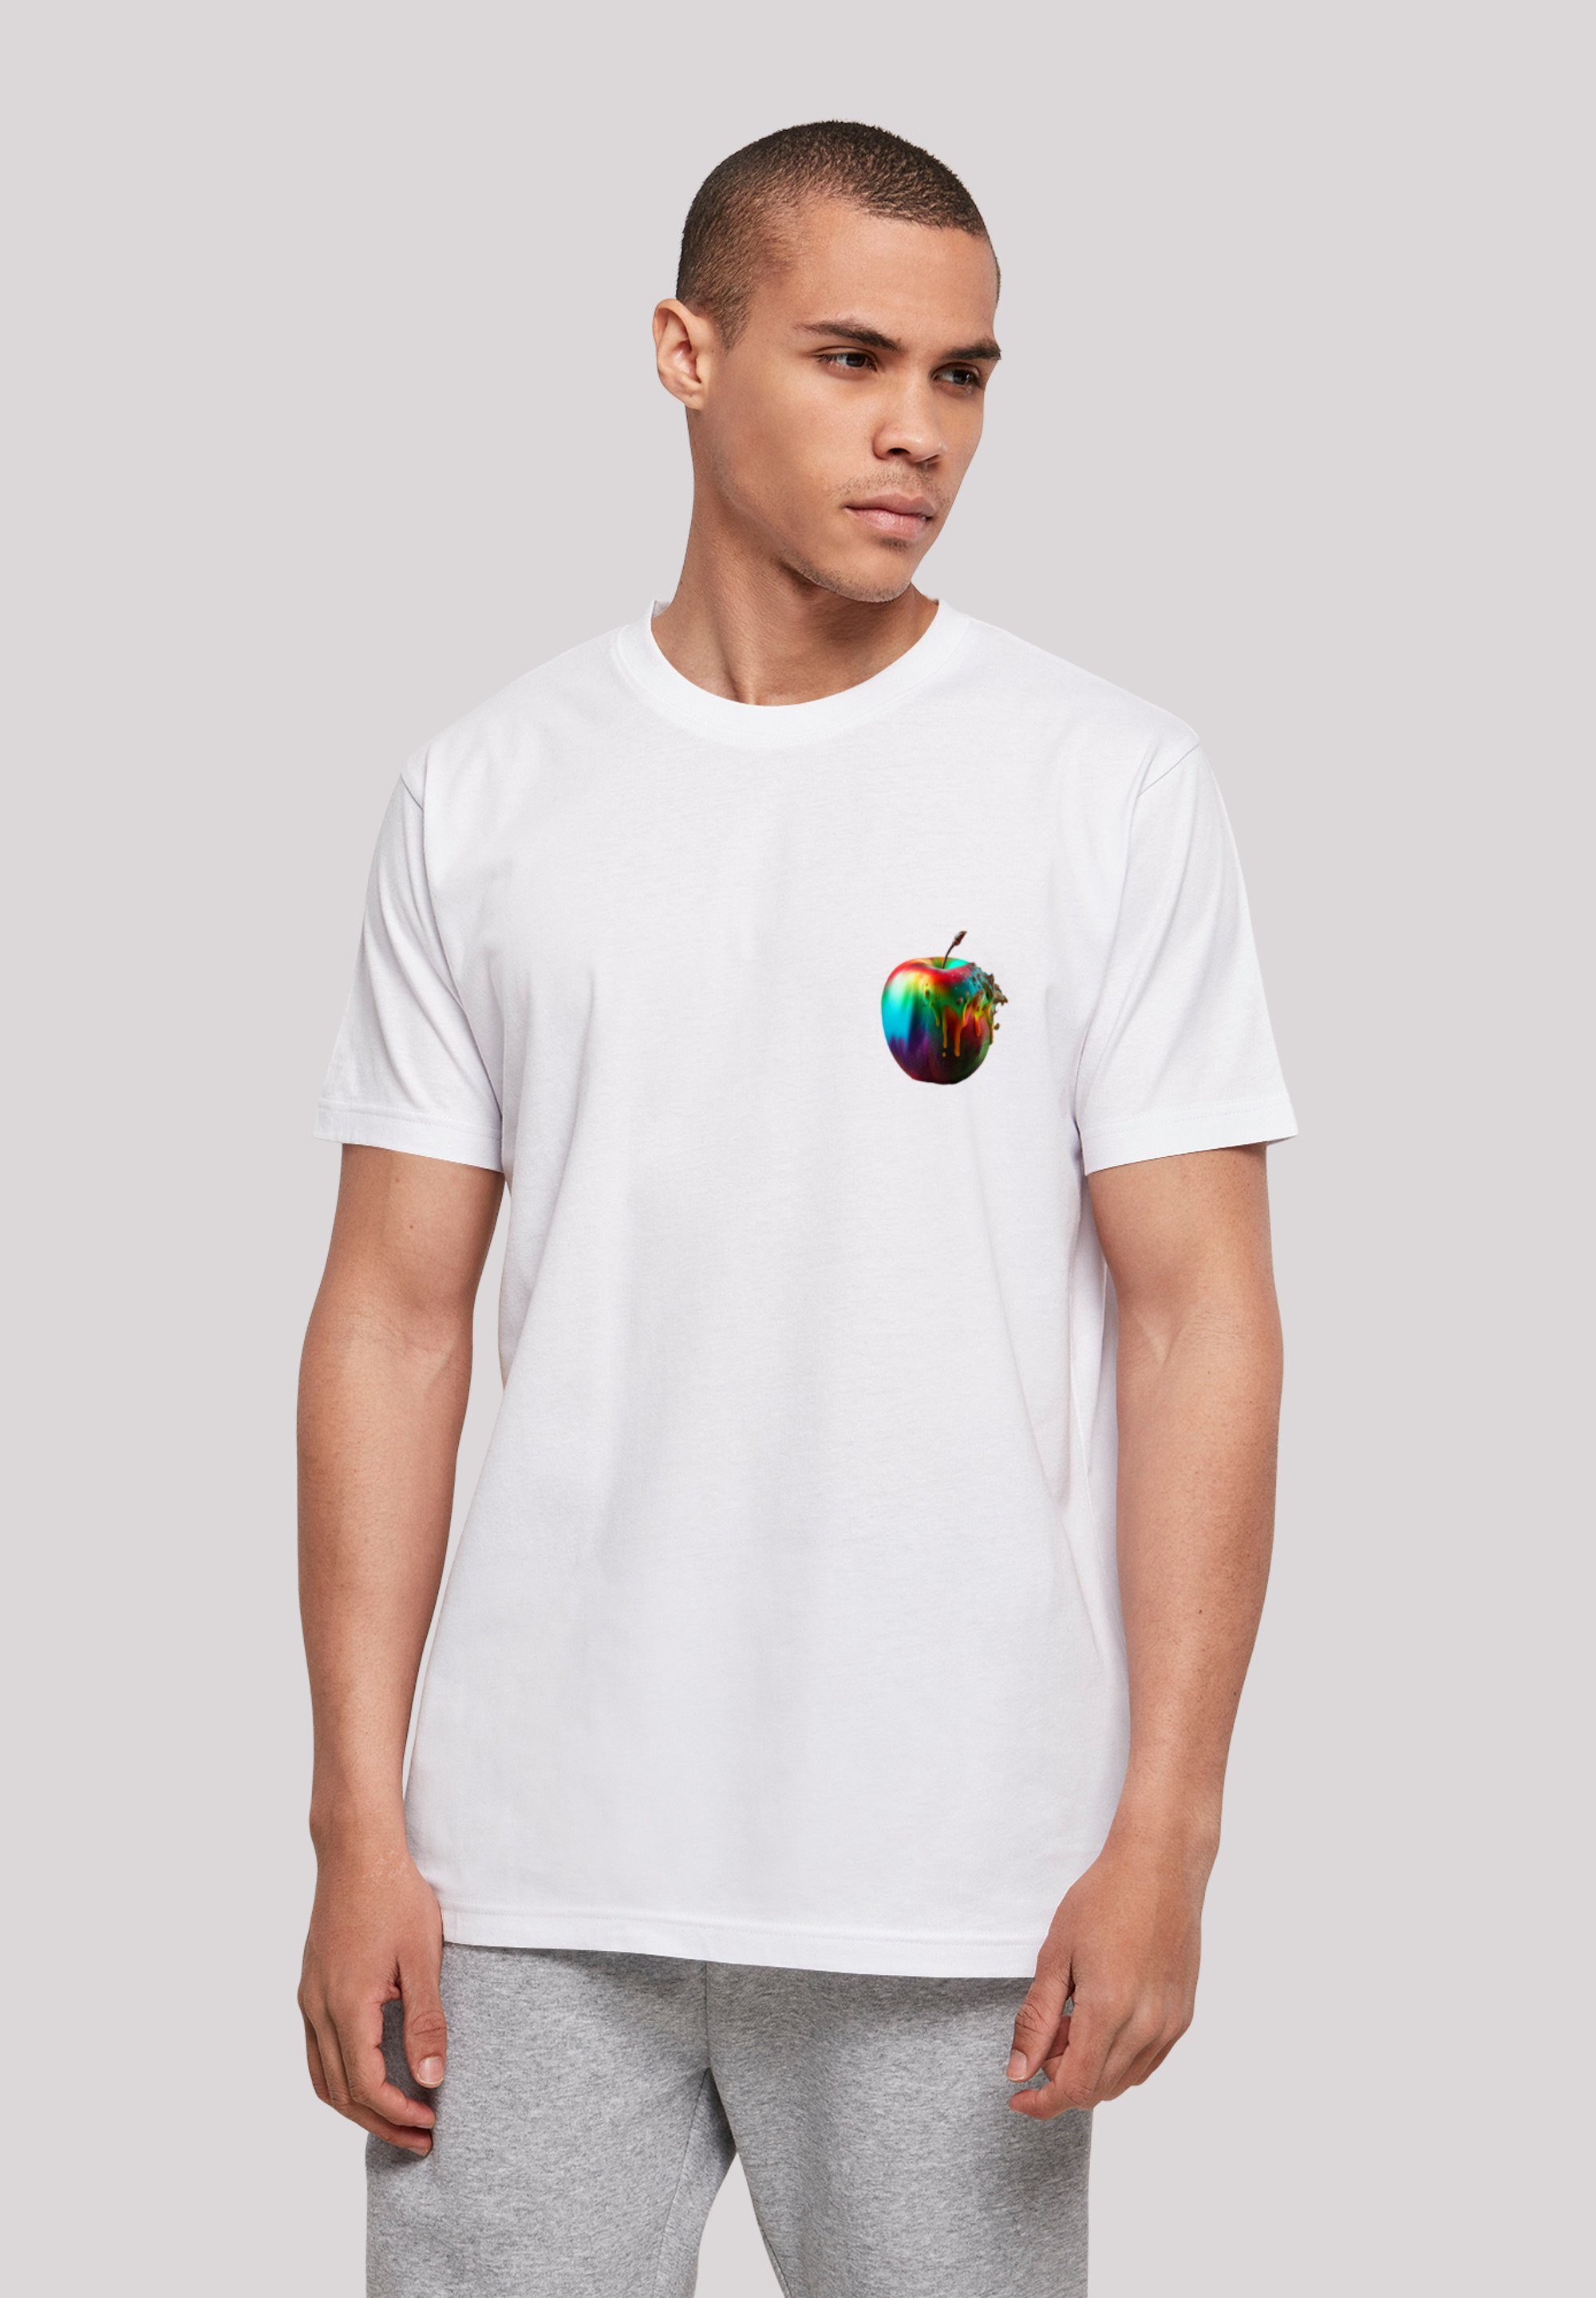 2024 Nr. 1 Beliebtheit F4NT4STIC T-Shirt Colorfood Collection weiß - Print Rainbow Apple